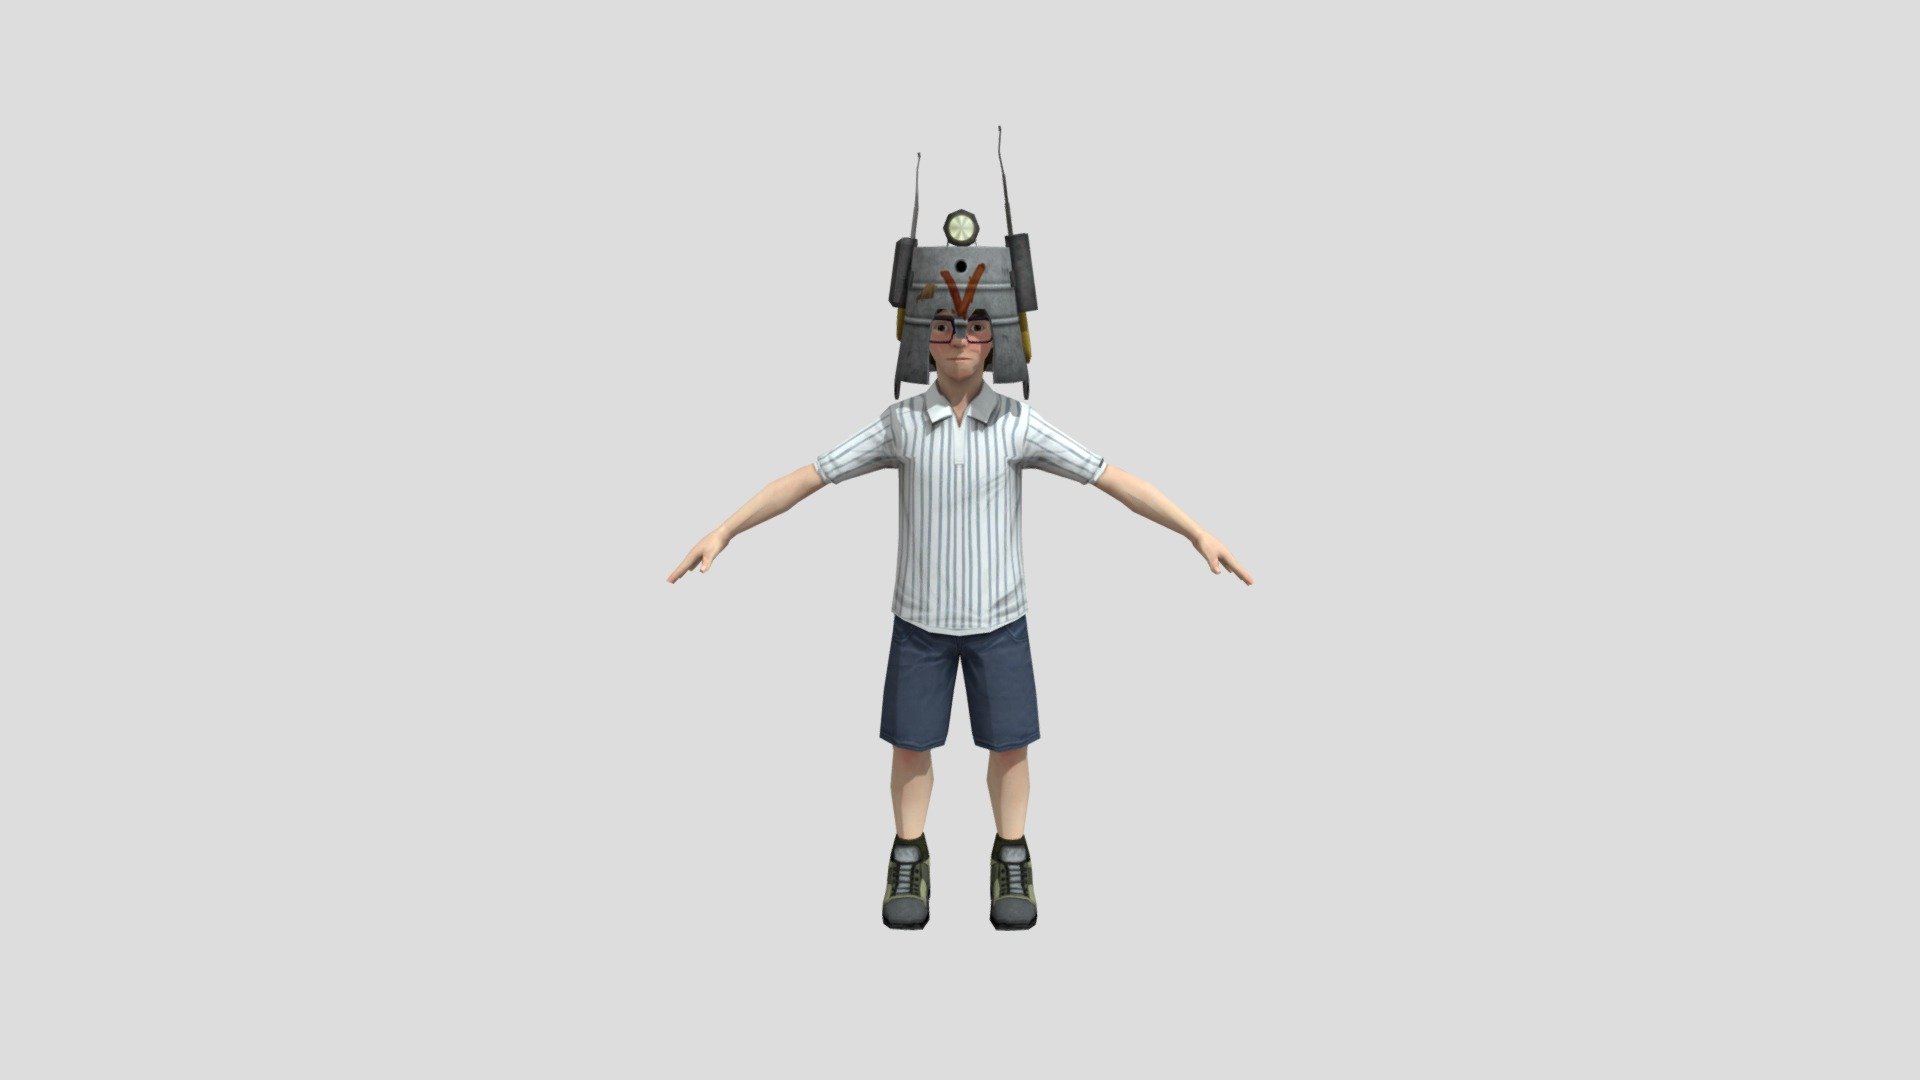 Ice Scream Horror Game: Mike with helmet - Download Free 3D model by  EWTube0 (@EWTube0) [e171296]